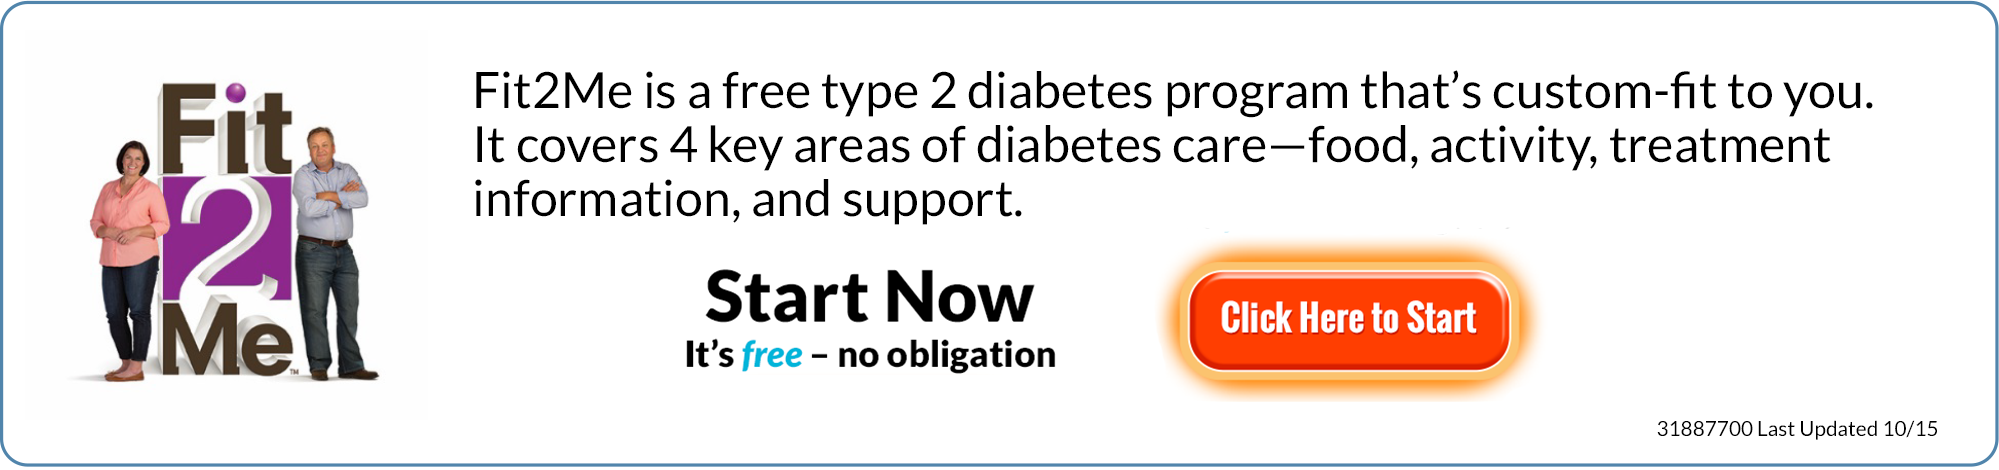 fit2me type 2 diabetes program